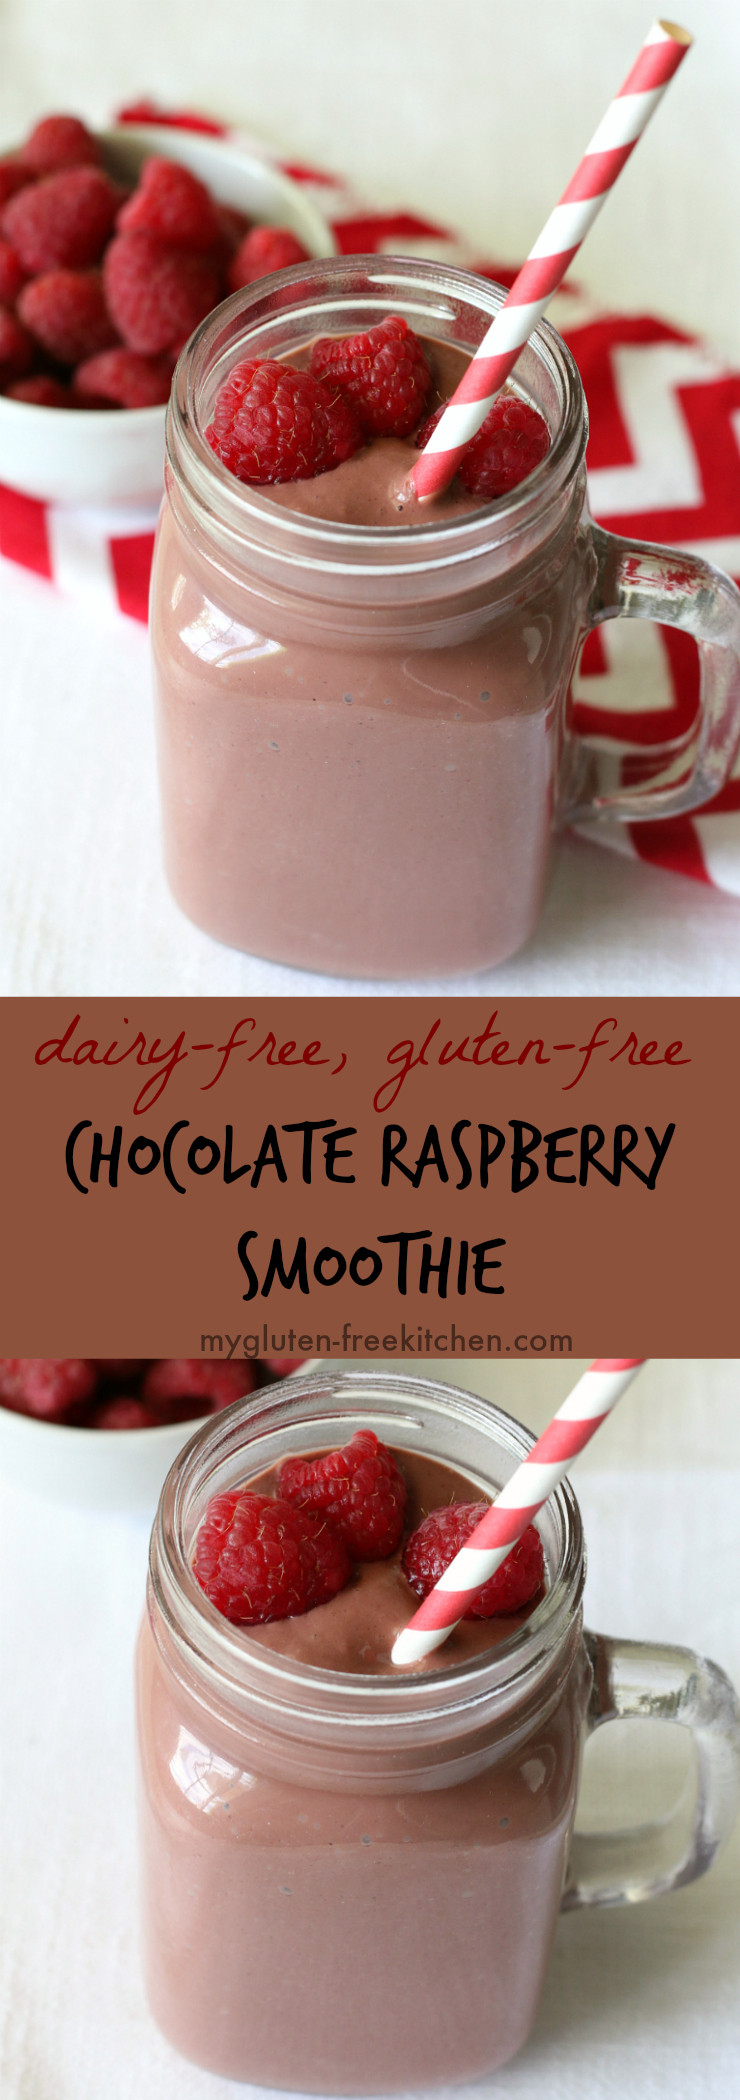 Dairy Free Smoothie Recipes
 Dairy free Chocolate Raspberry Smoothie